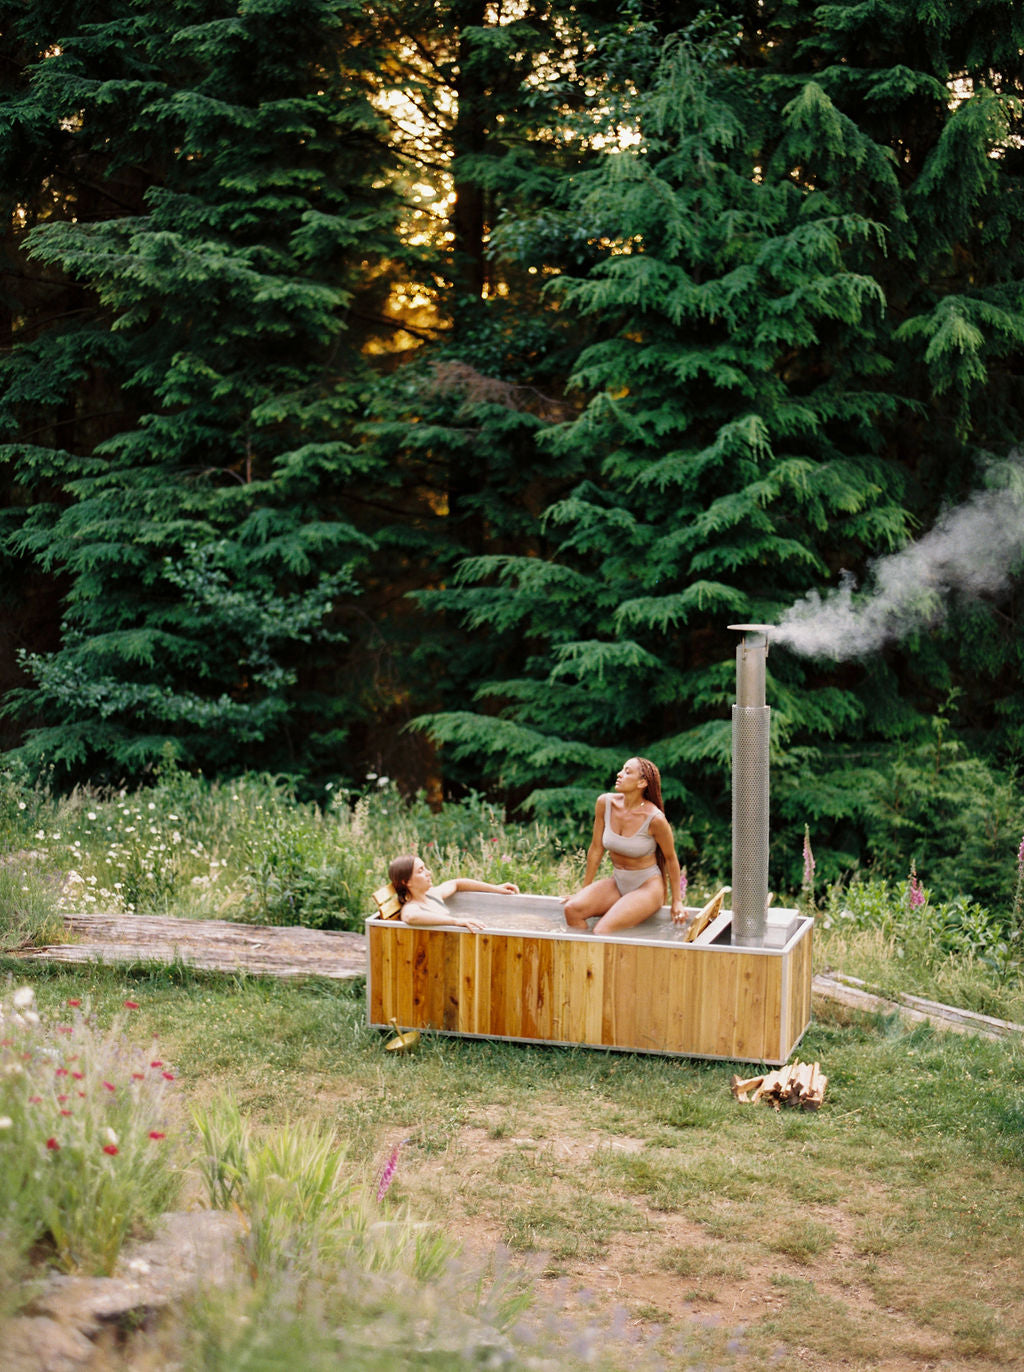 Wood Burning Hot Tub - rectangular hot tub